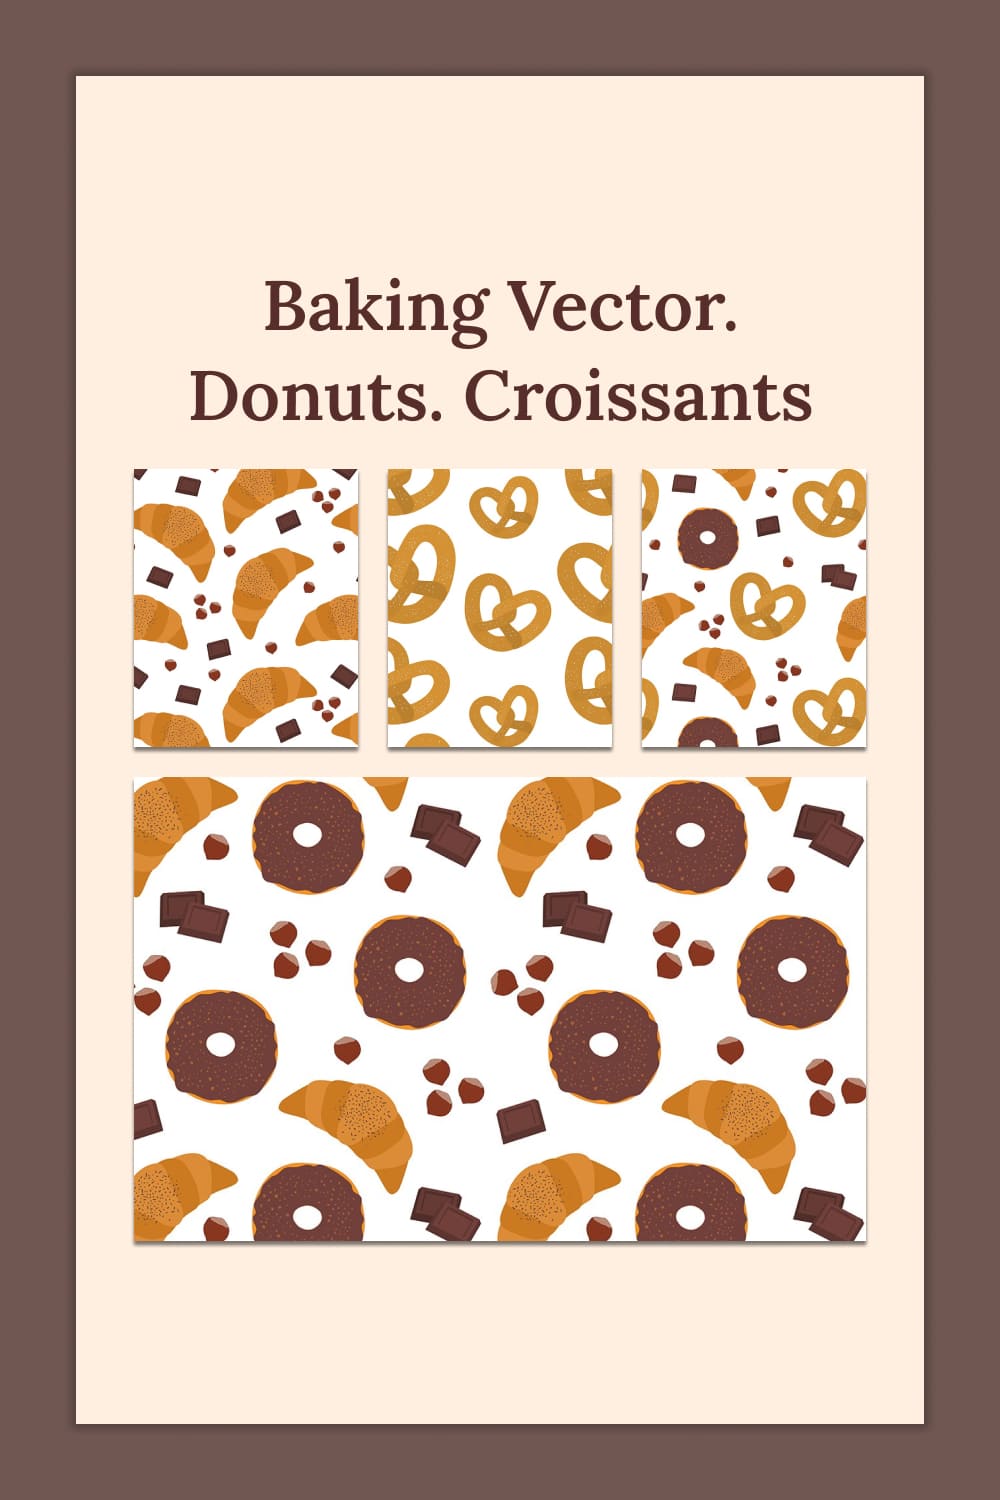 Baking vector. donuts. croissants - Pinterest image preview.